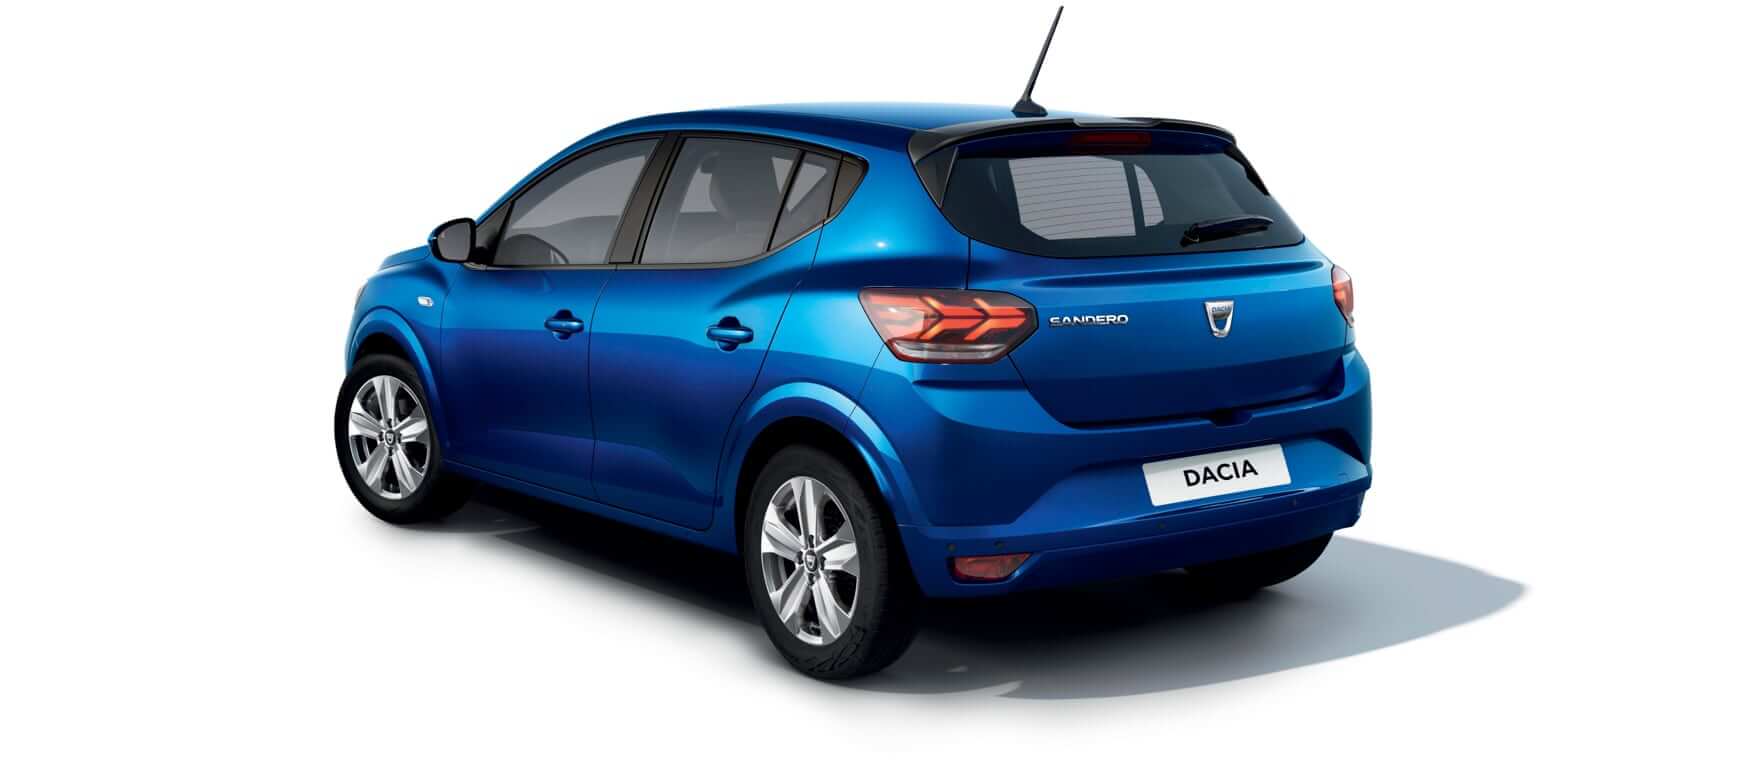 Dacia rear view